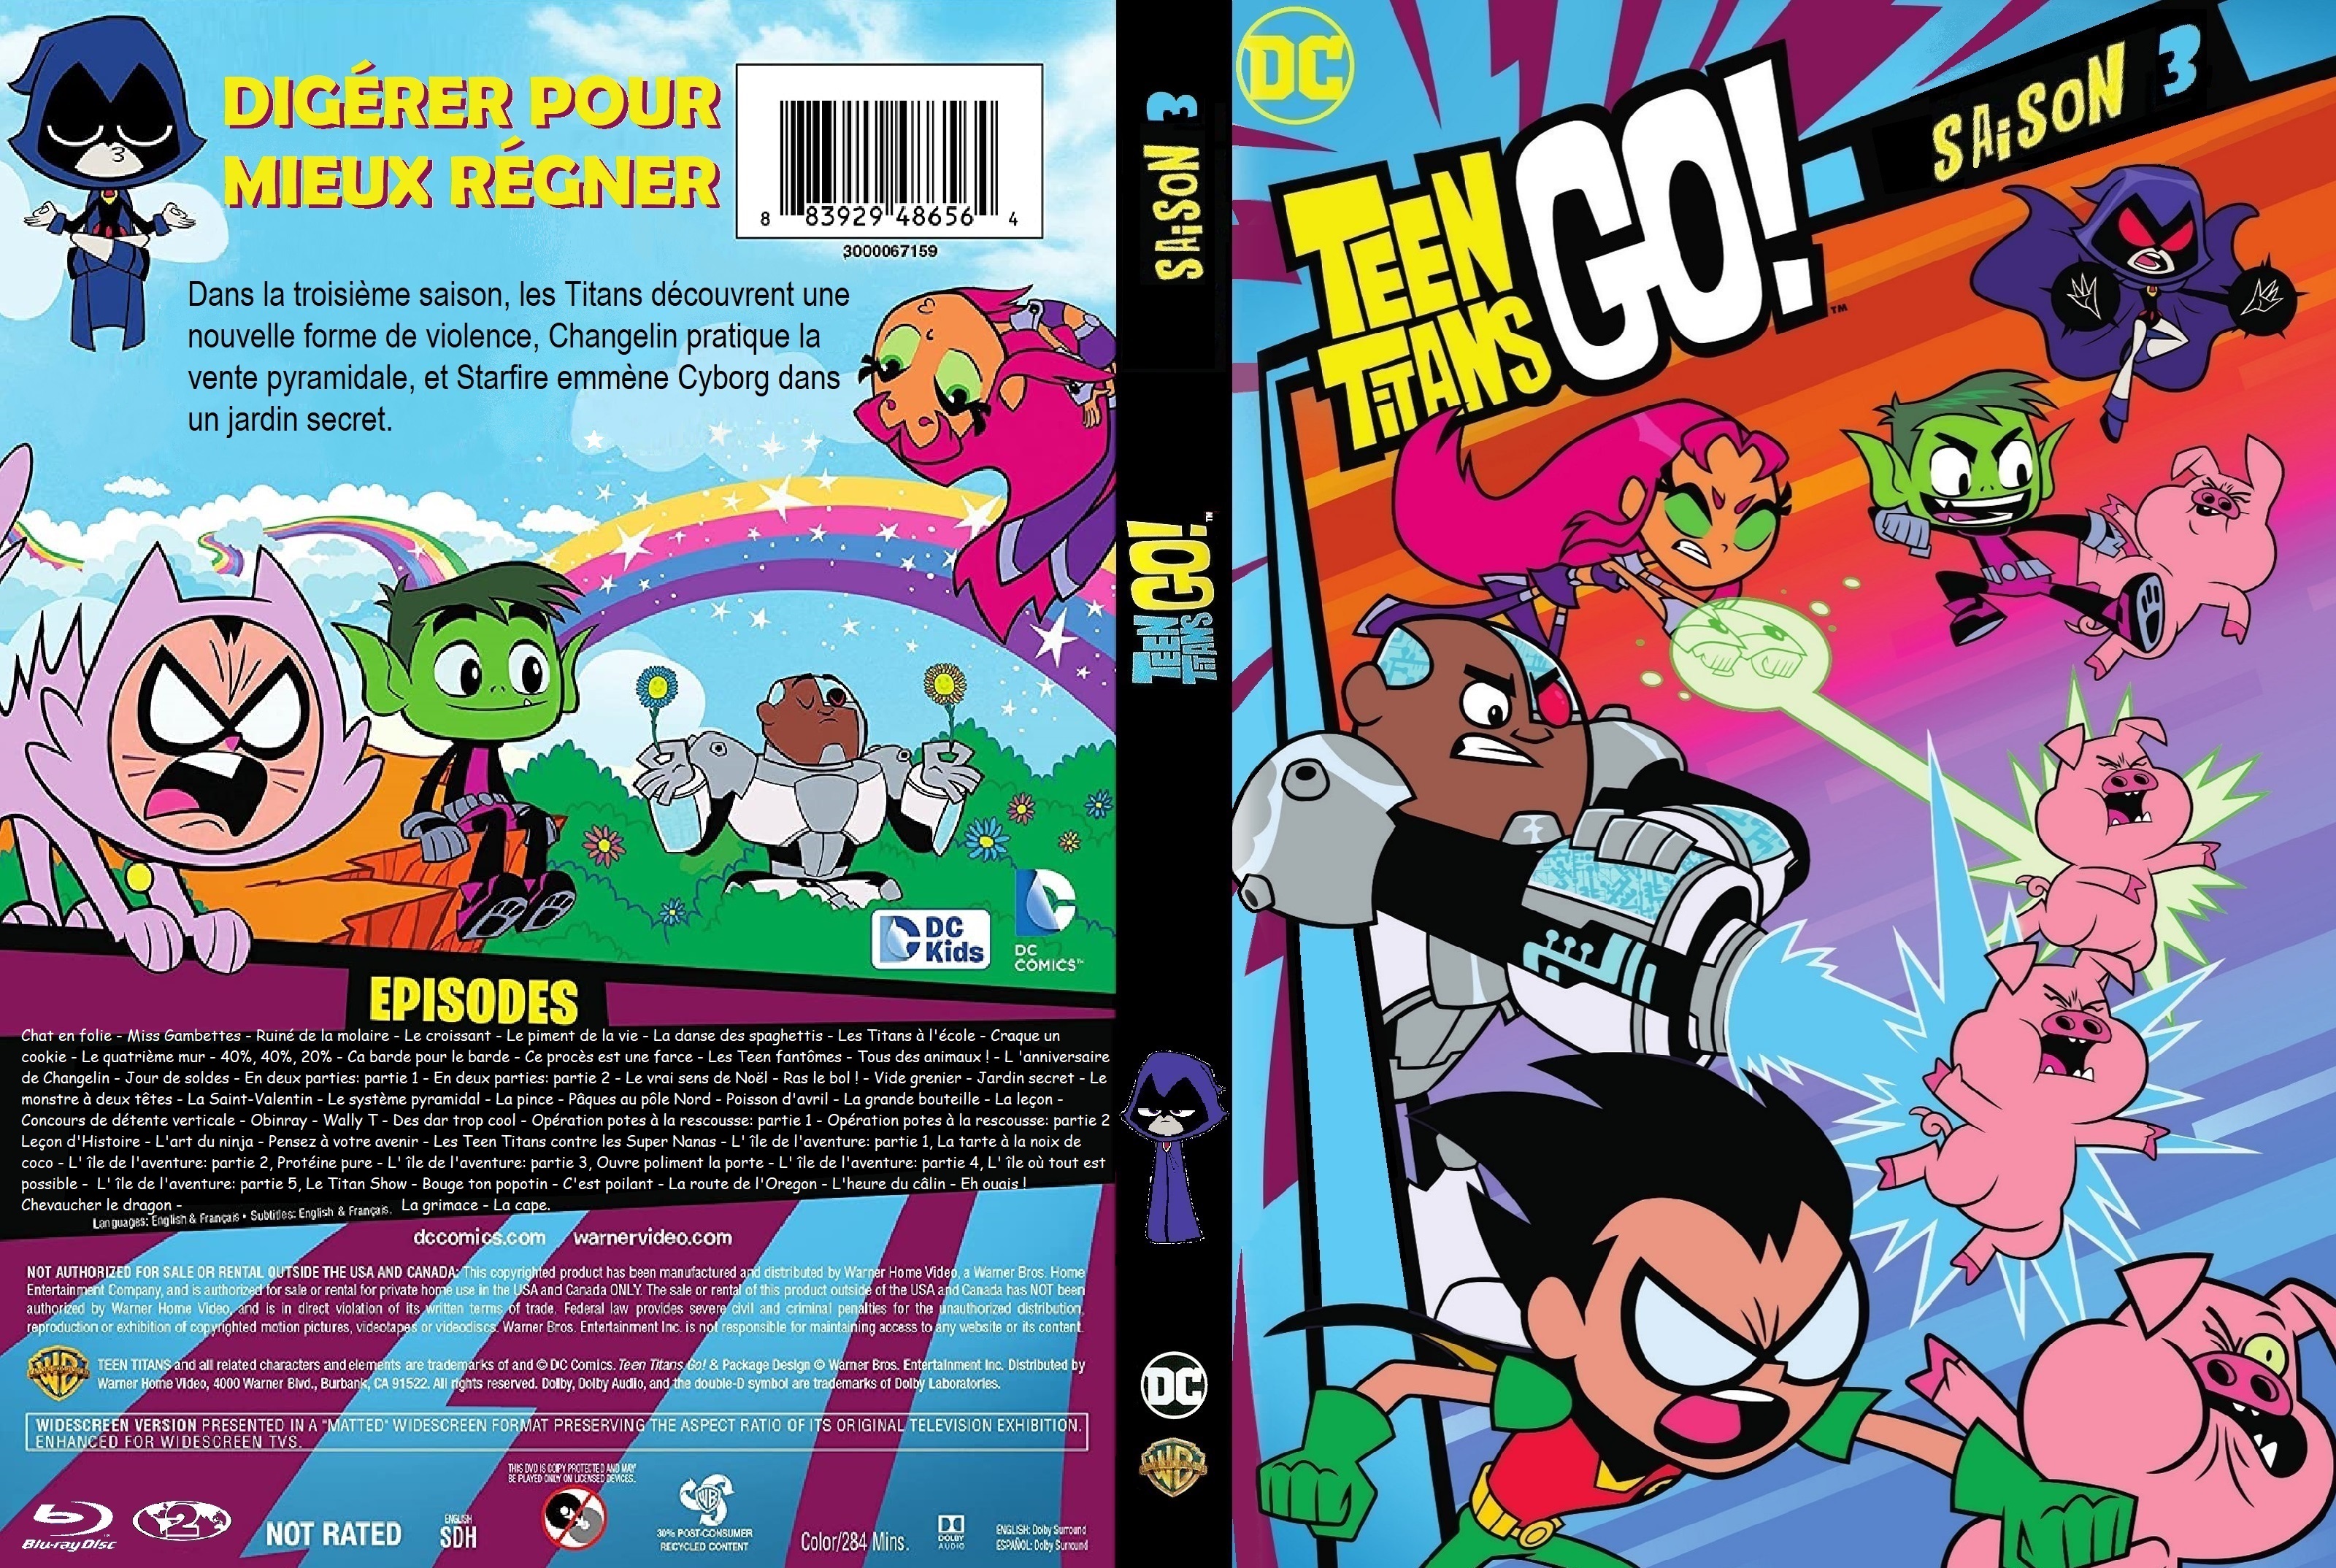 Jaquette DVD Teen Titans Go! saison 3 custom